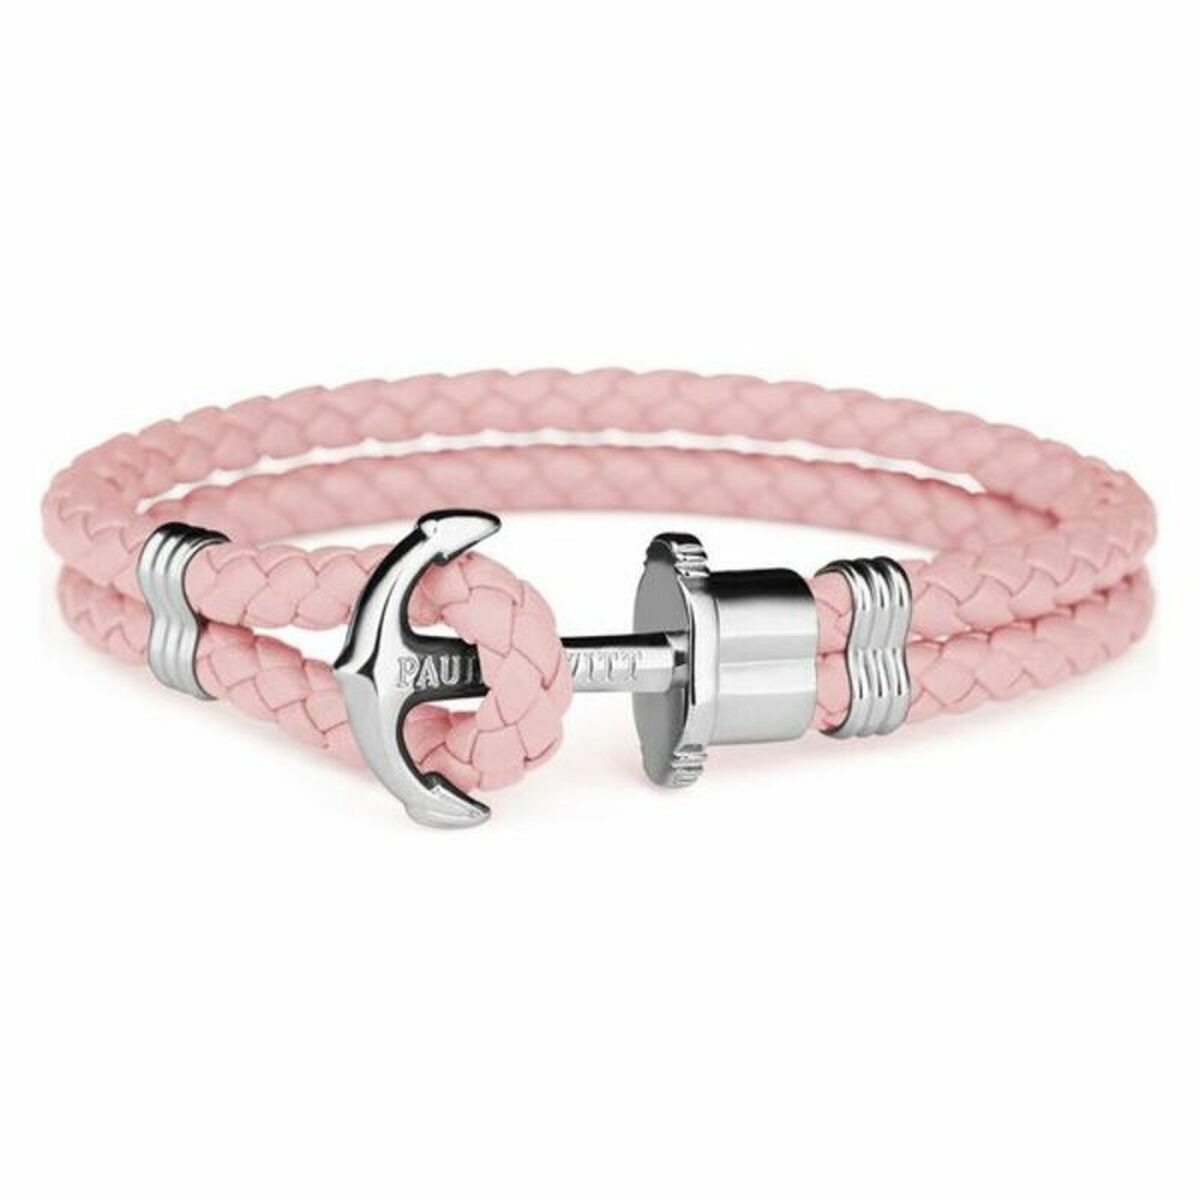 Bracelet Paul Hewitt PH-PH-L-S-A Pink